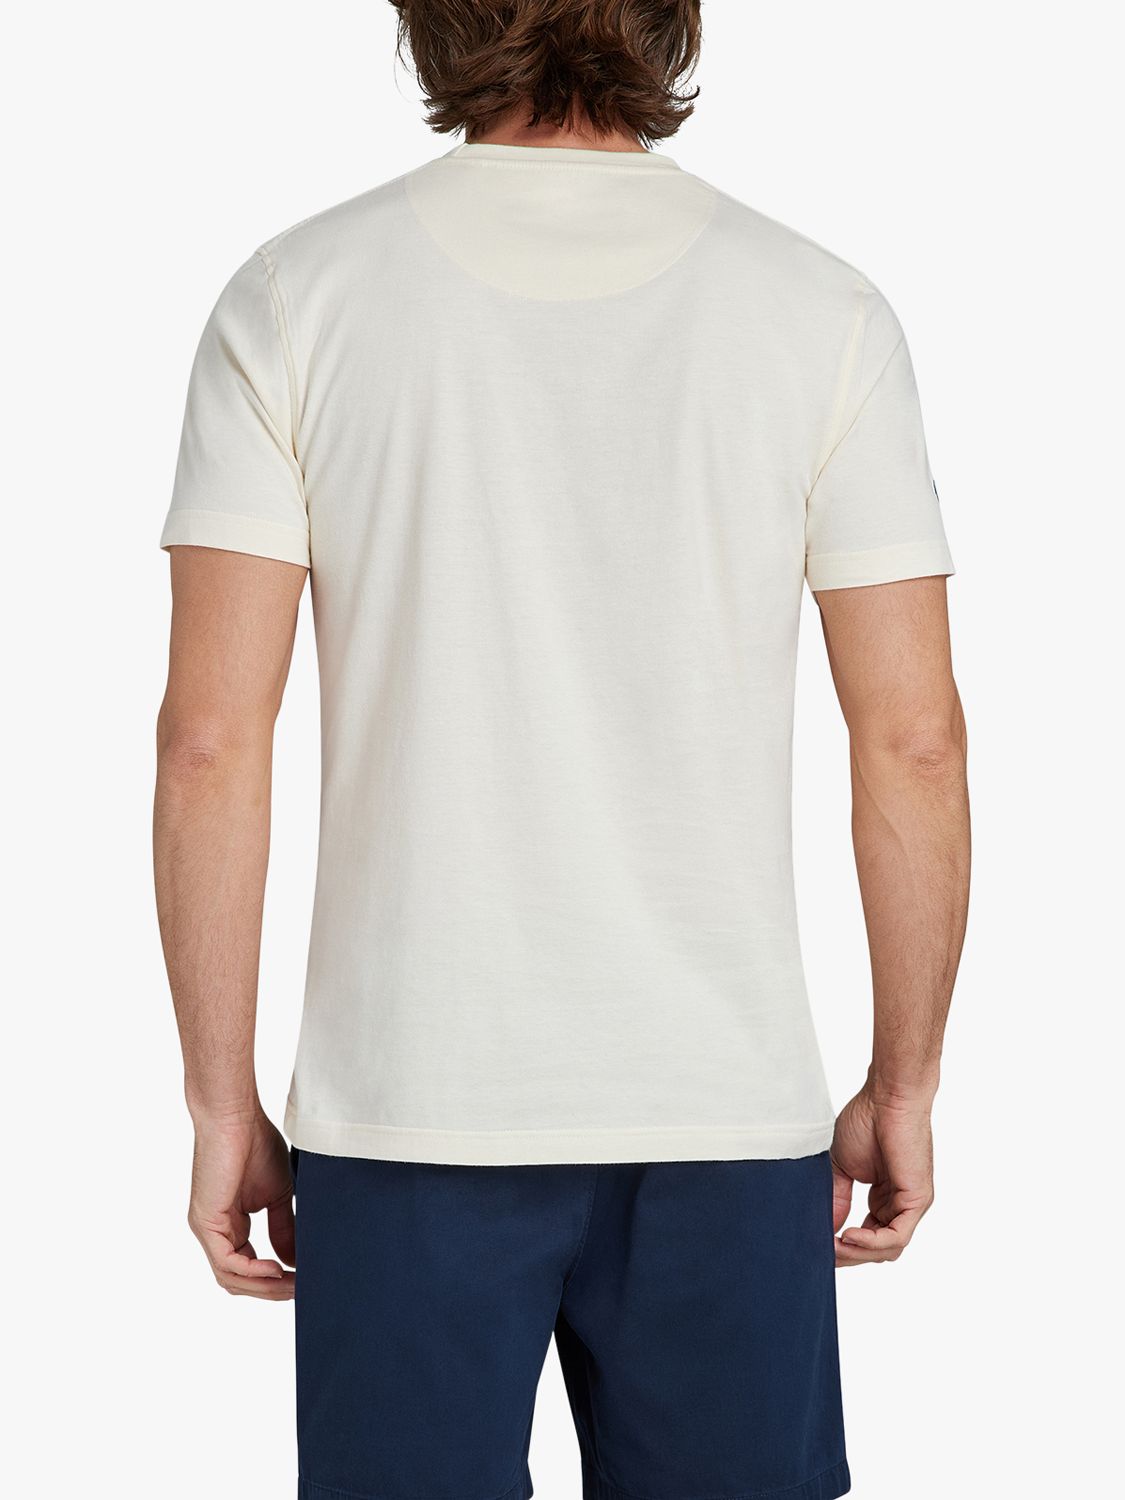 Raging Bull Deckchair Bully T-Shirt, Cream/Multi, L